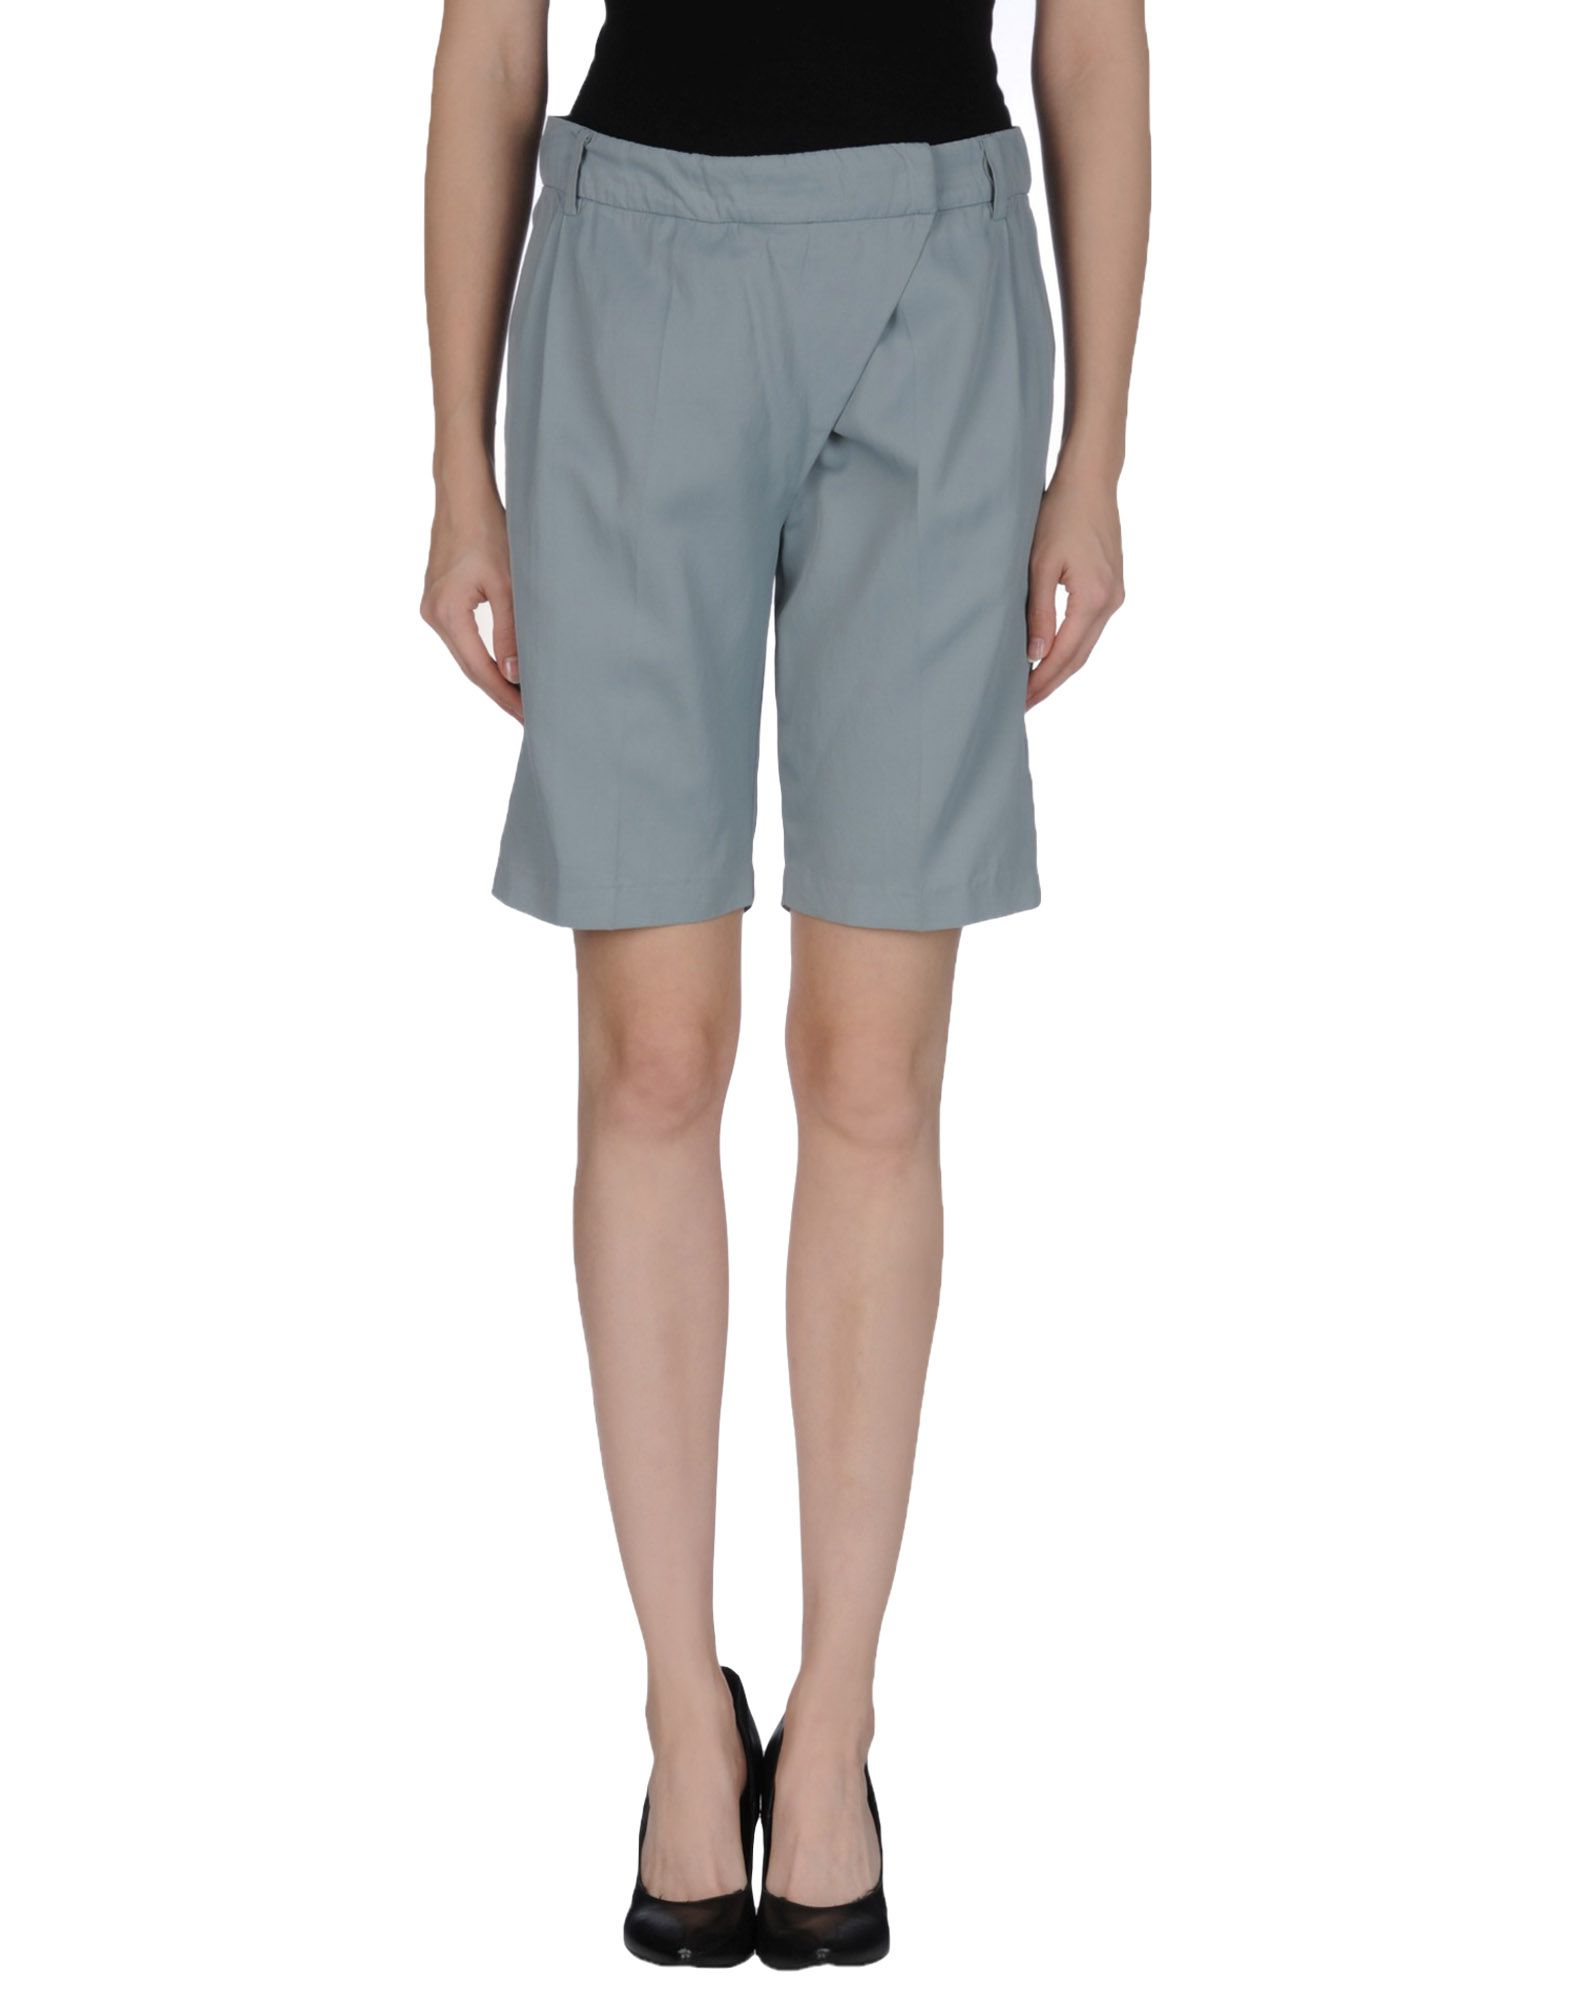 Gray bermuda shorts